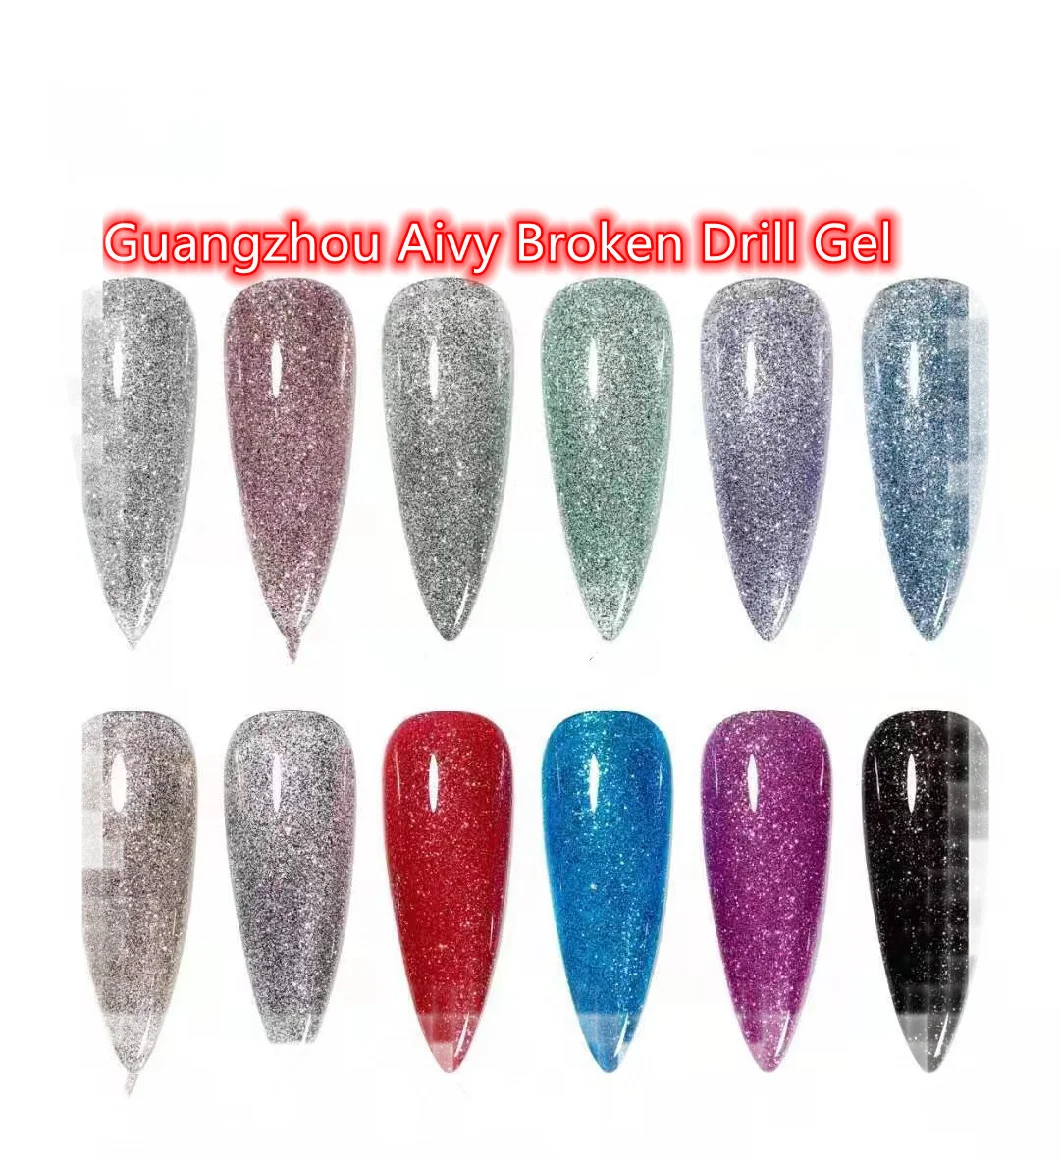 2021 Hot Sale Nail Art Design 12 Colors Broken Drill Gel UV Gel Polish